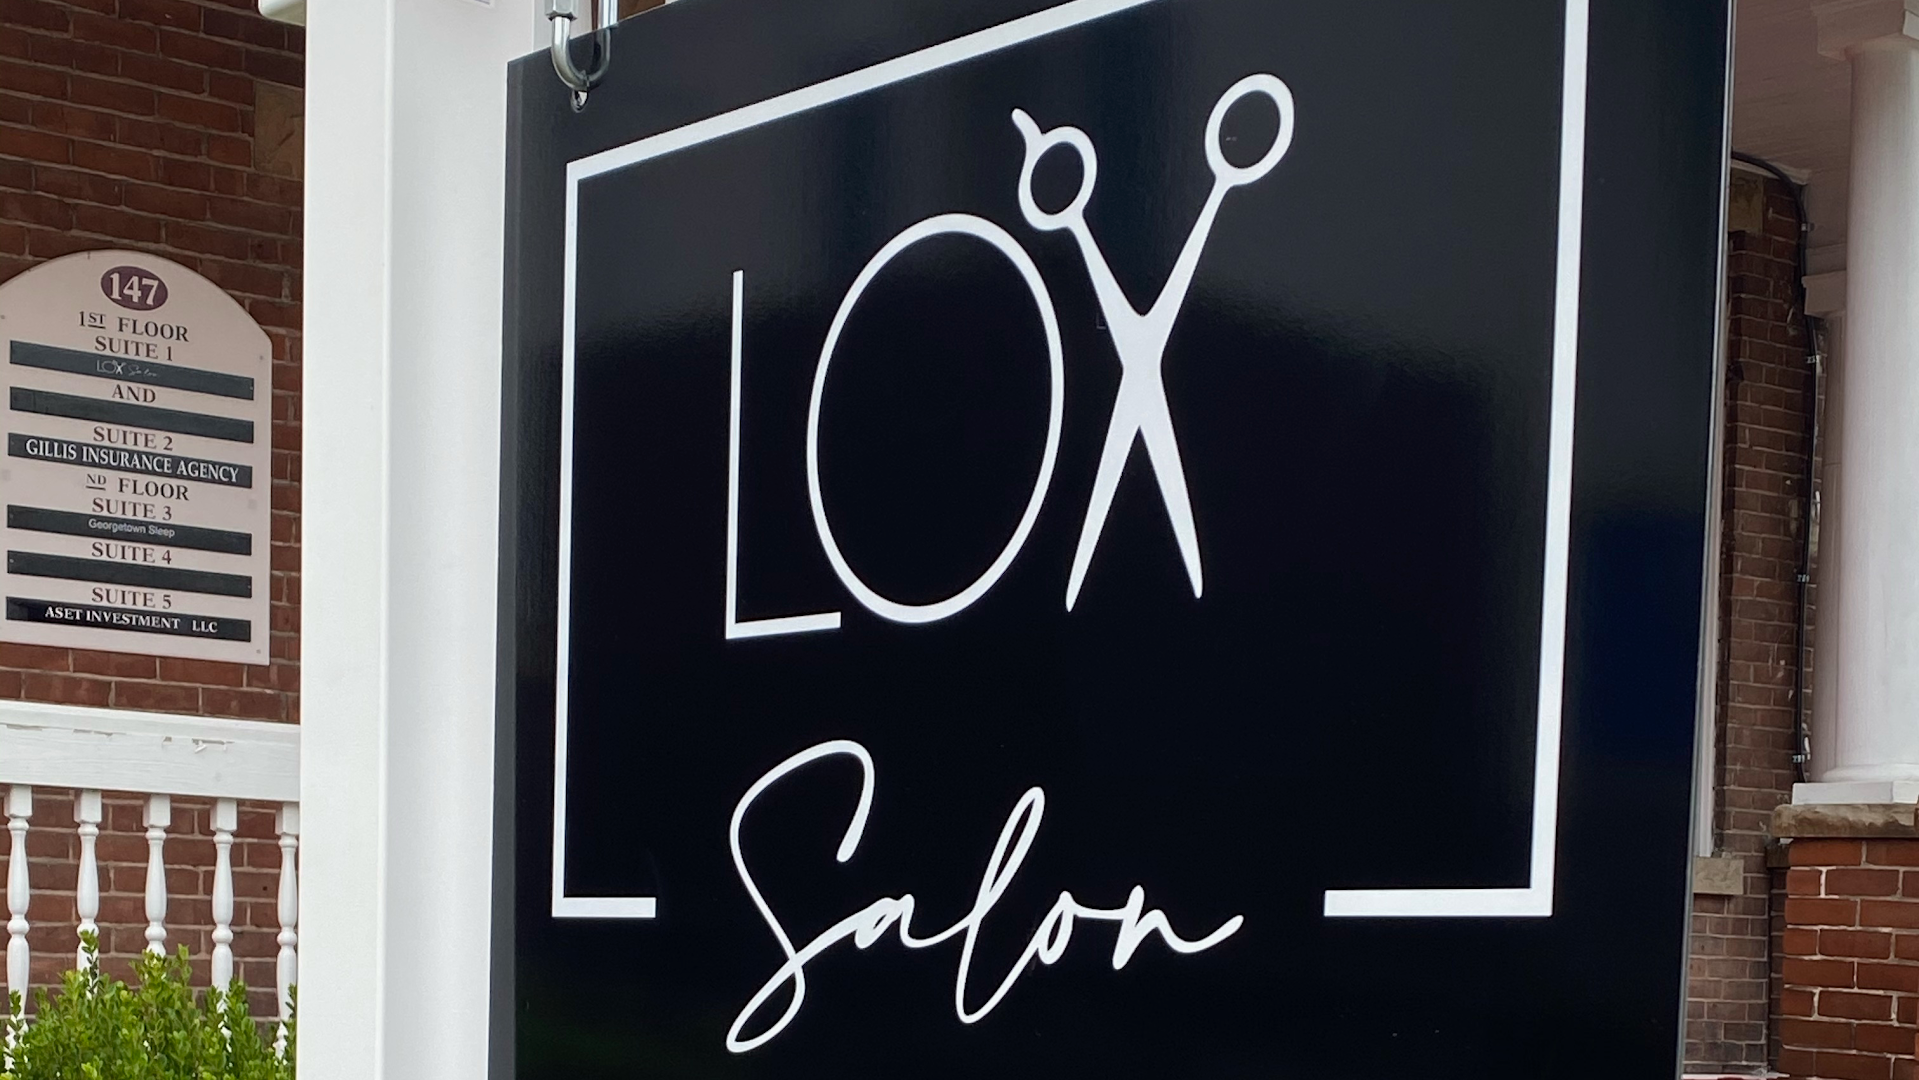 Lox Salon